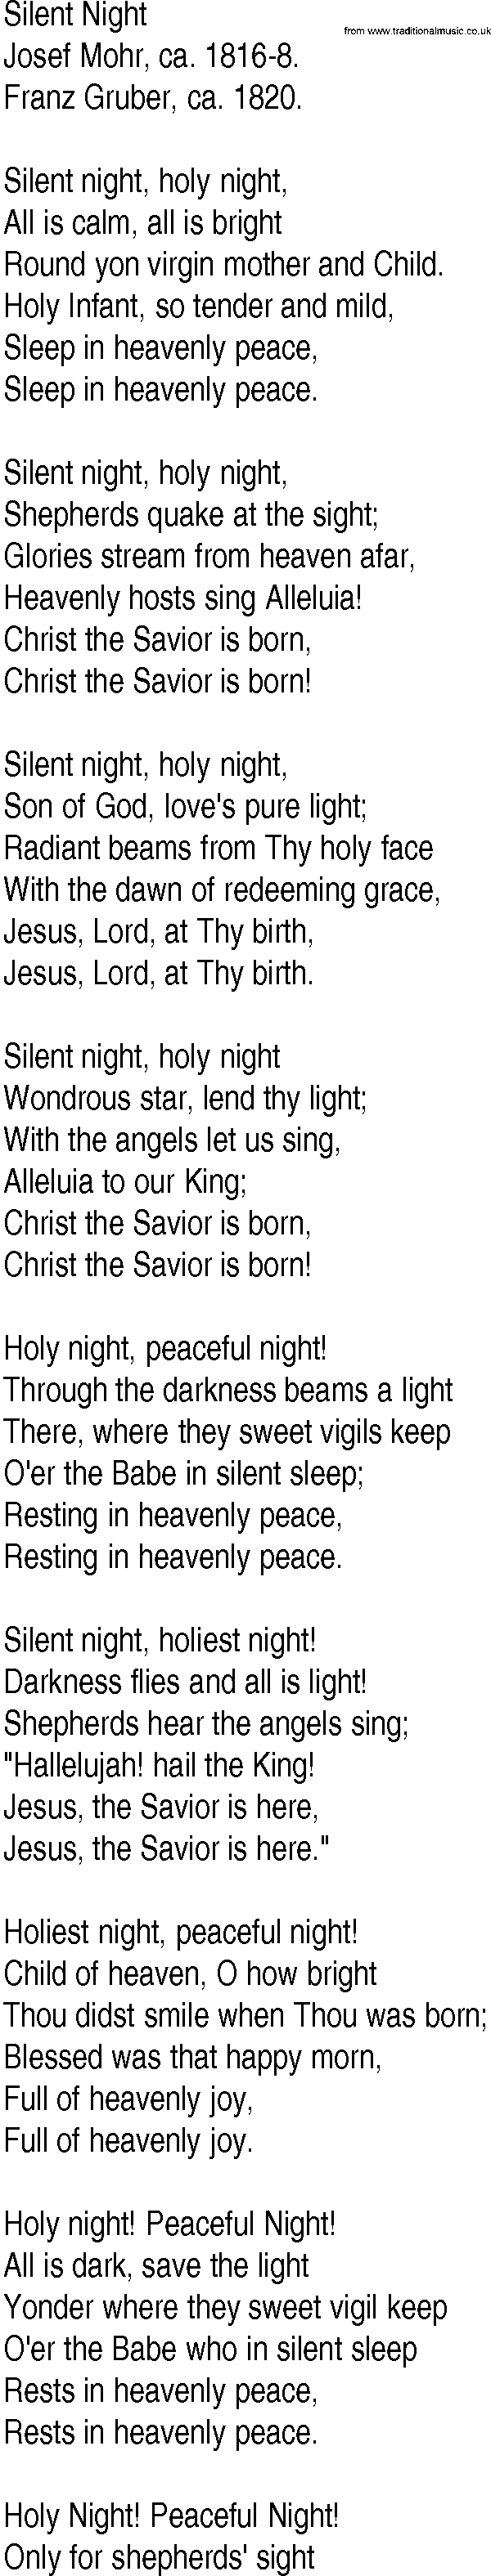 Hymn and Gospel Song: Silent Night by Josef Mohr ca lyrics